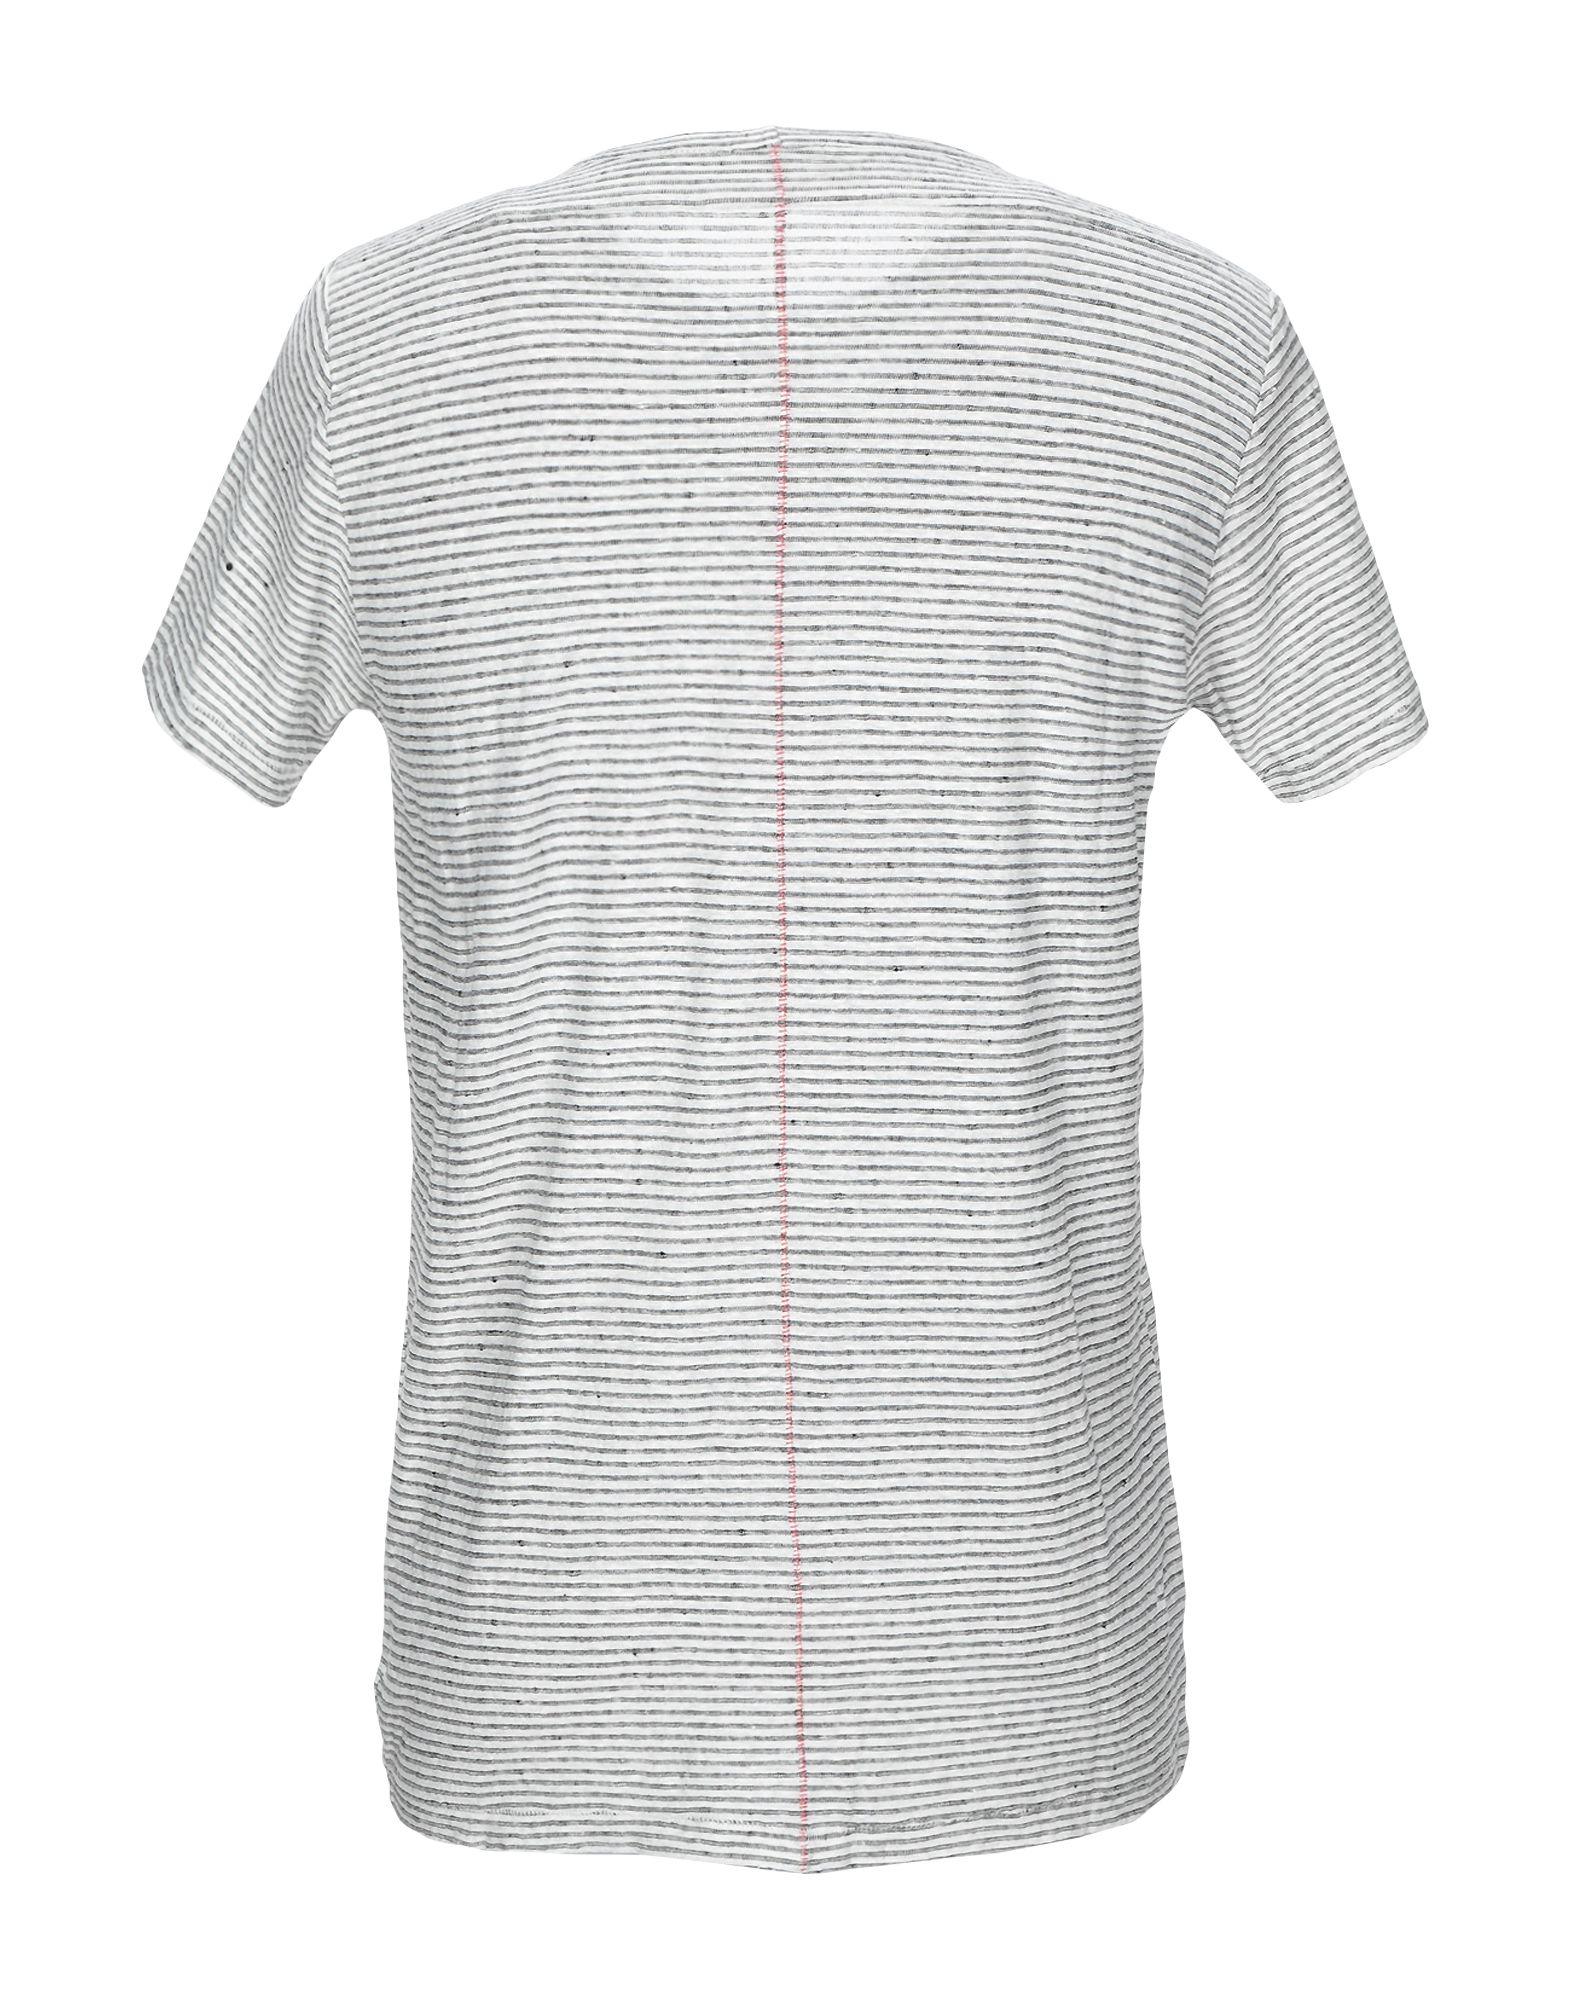 Homecore T-shirt in White for Men - Lyst